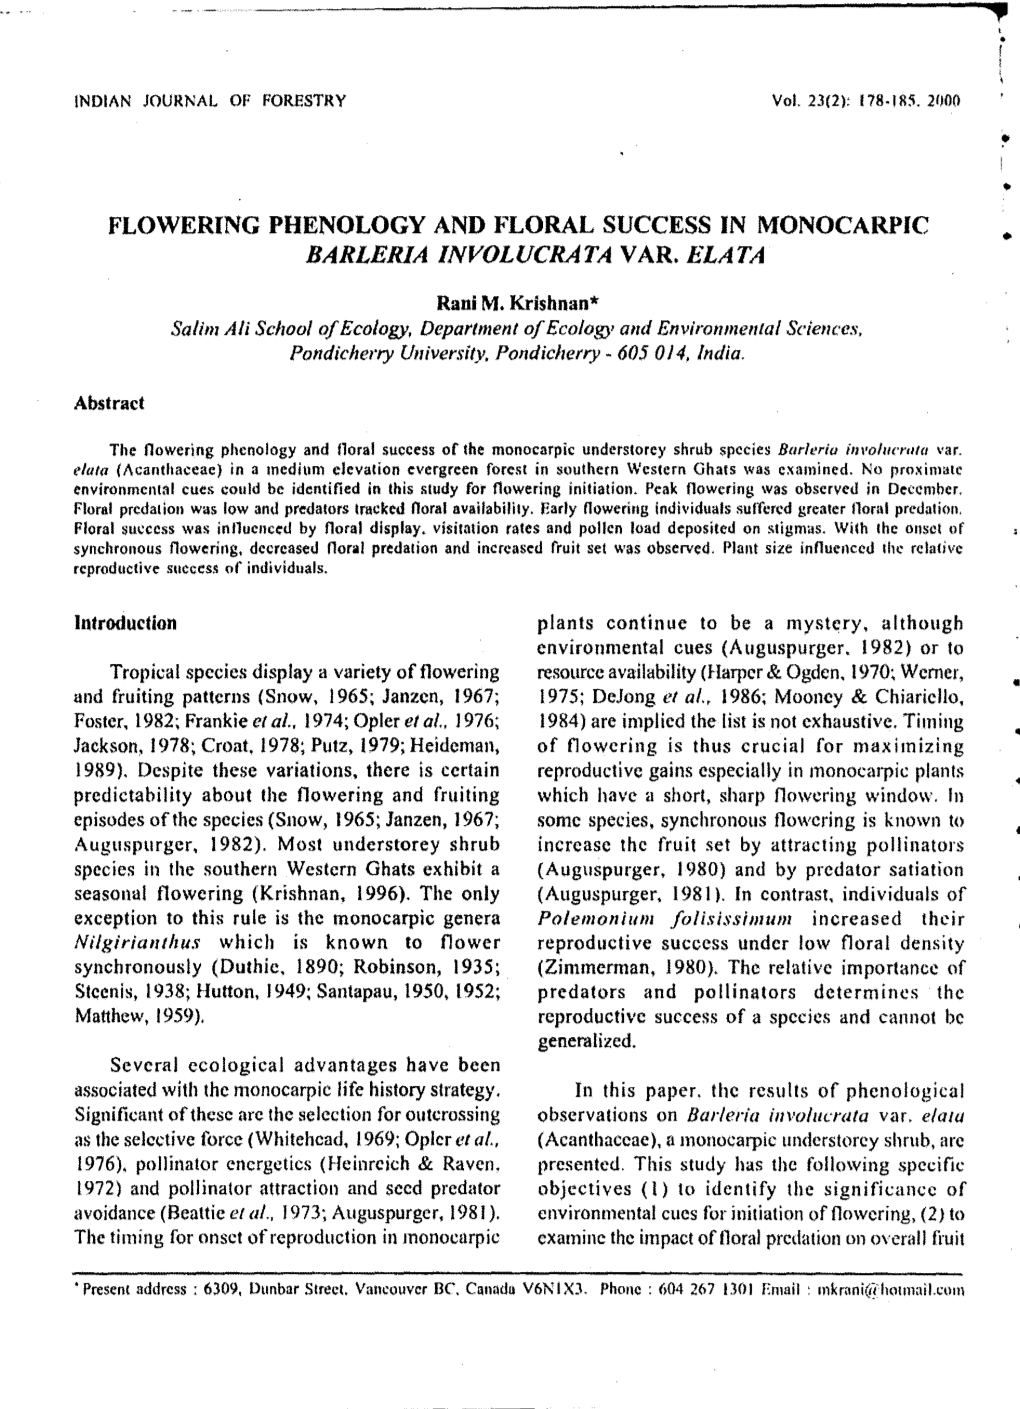 Flowering Phenology Article (550.3Kb)